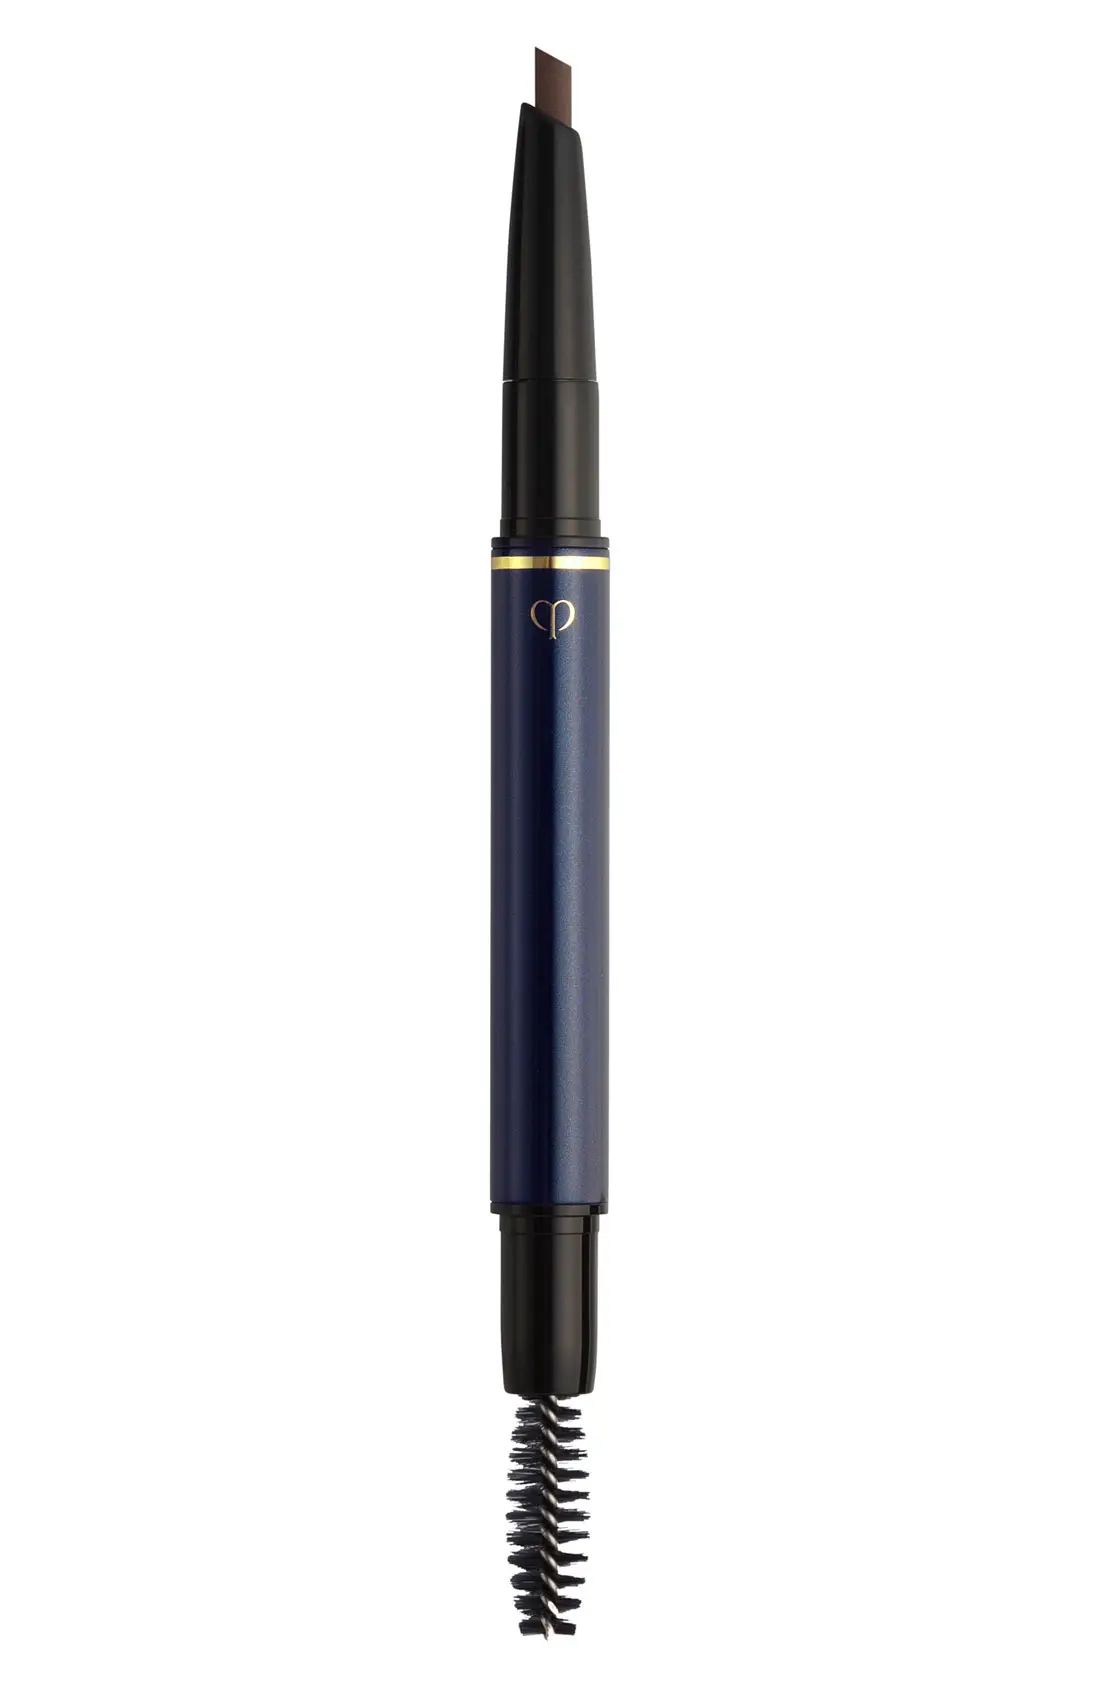 Cle de Peau Beaute Eyebrow Pencil Cartridge in 201 at Nordstrom | Nordstrom